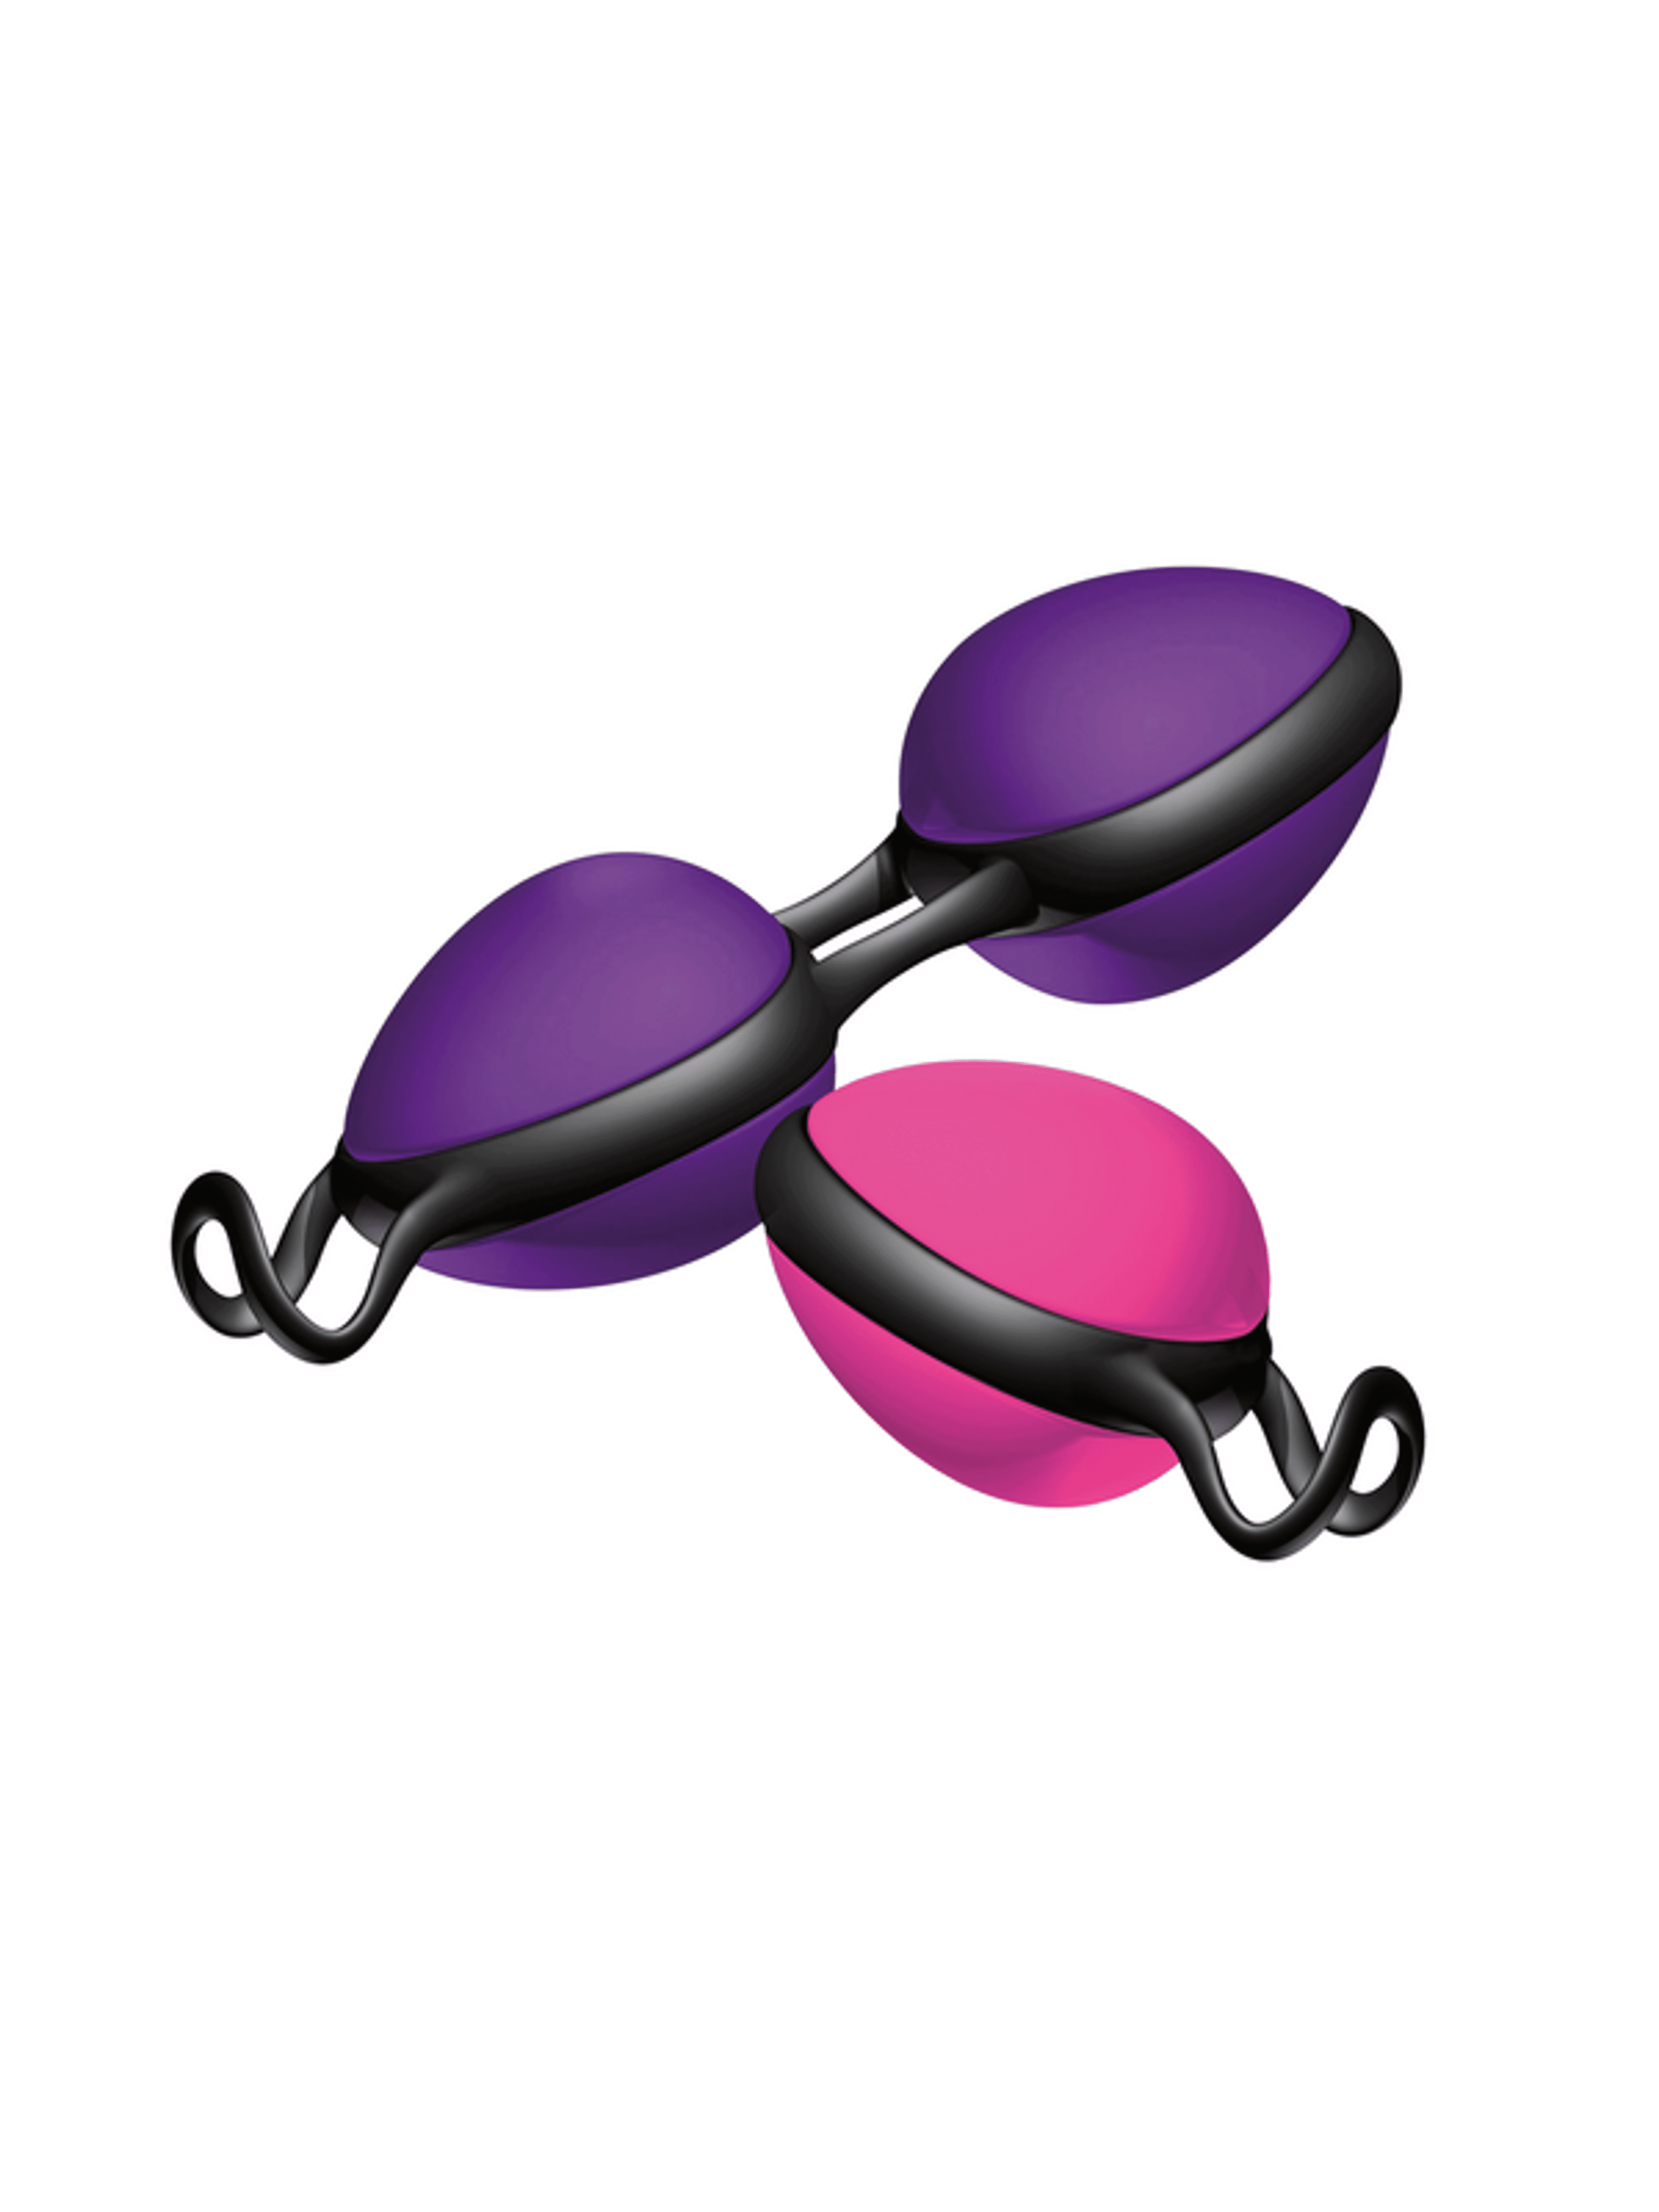 Joydivision Joyballs Secret Set magneta purple black - 1 db-3